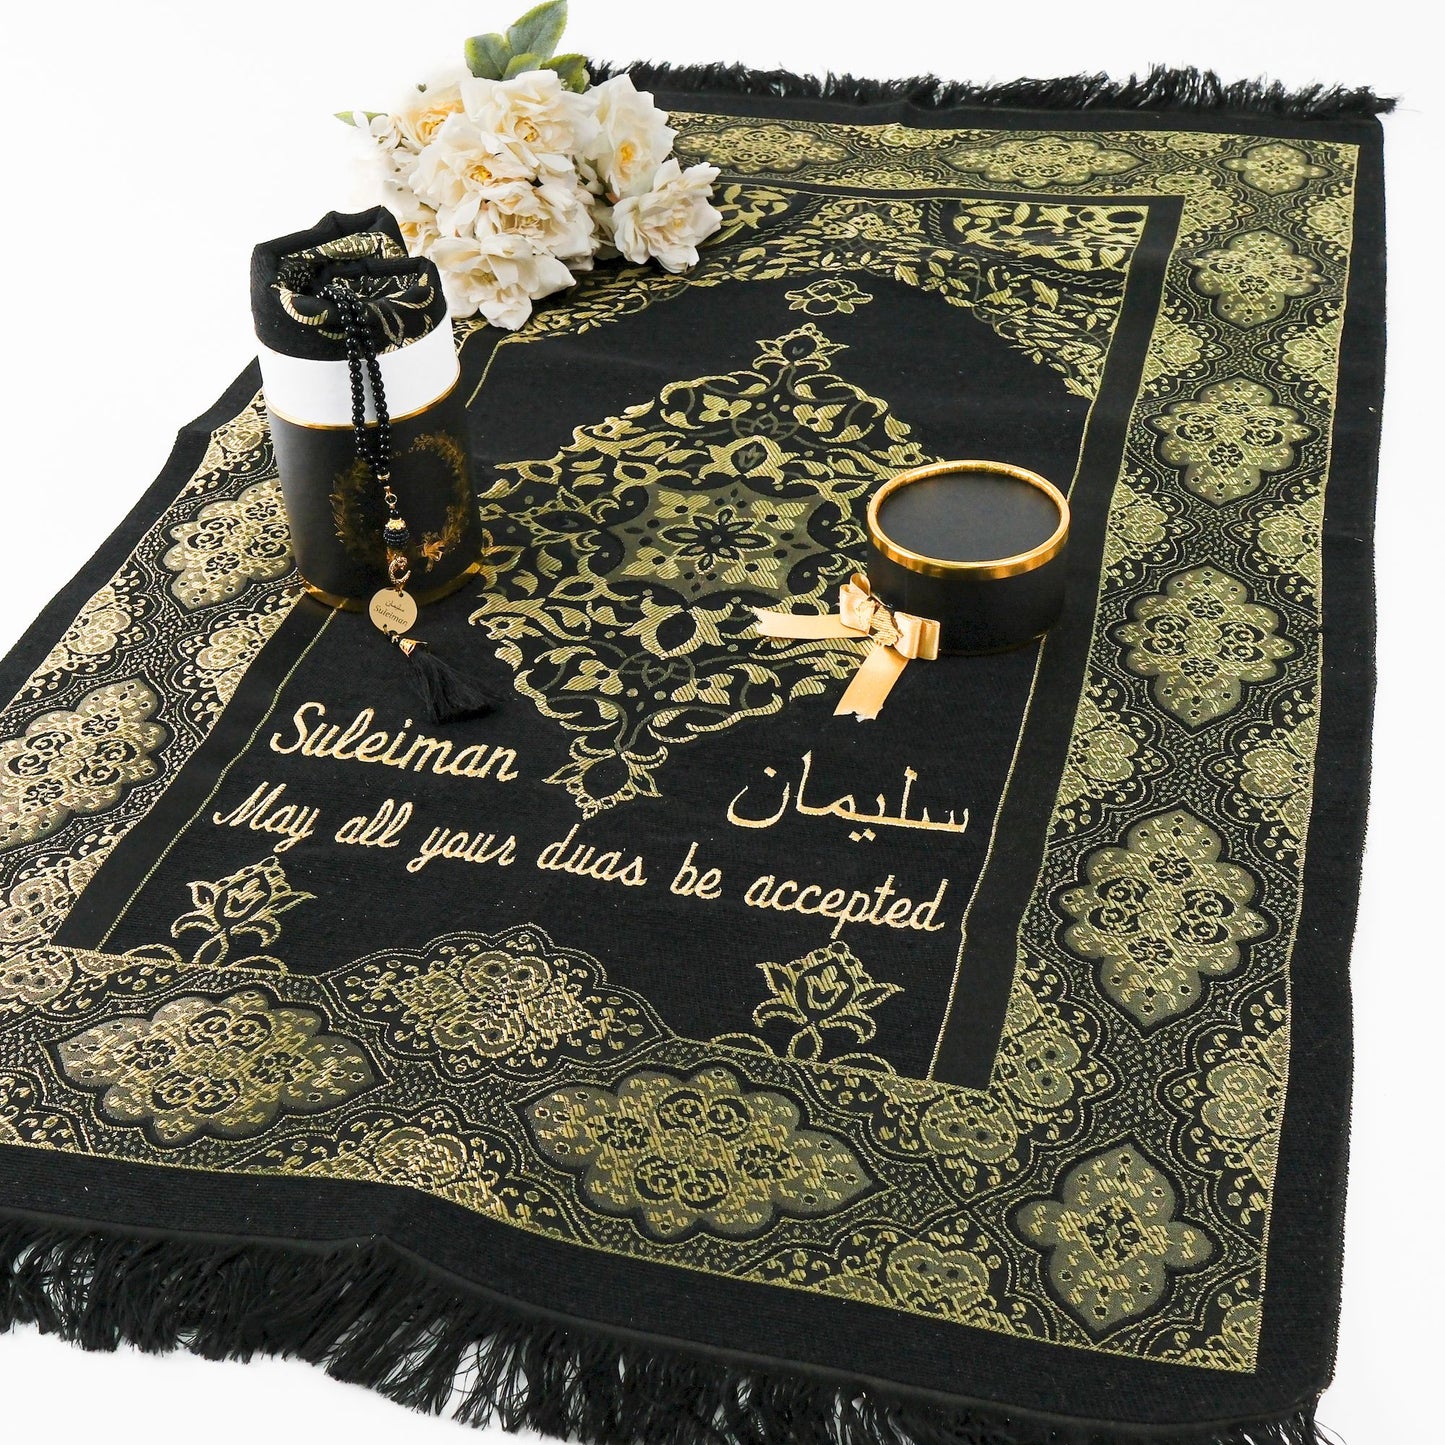 Personalized Funny Travel Prayer Mat Tasbeeh Islamic Muslim Gift Set